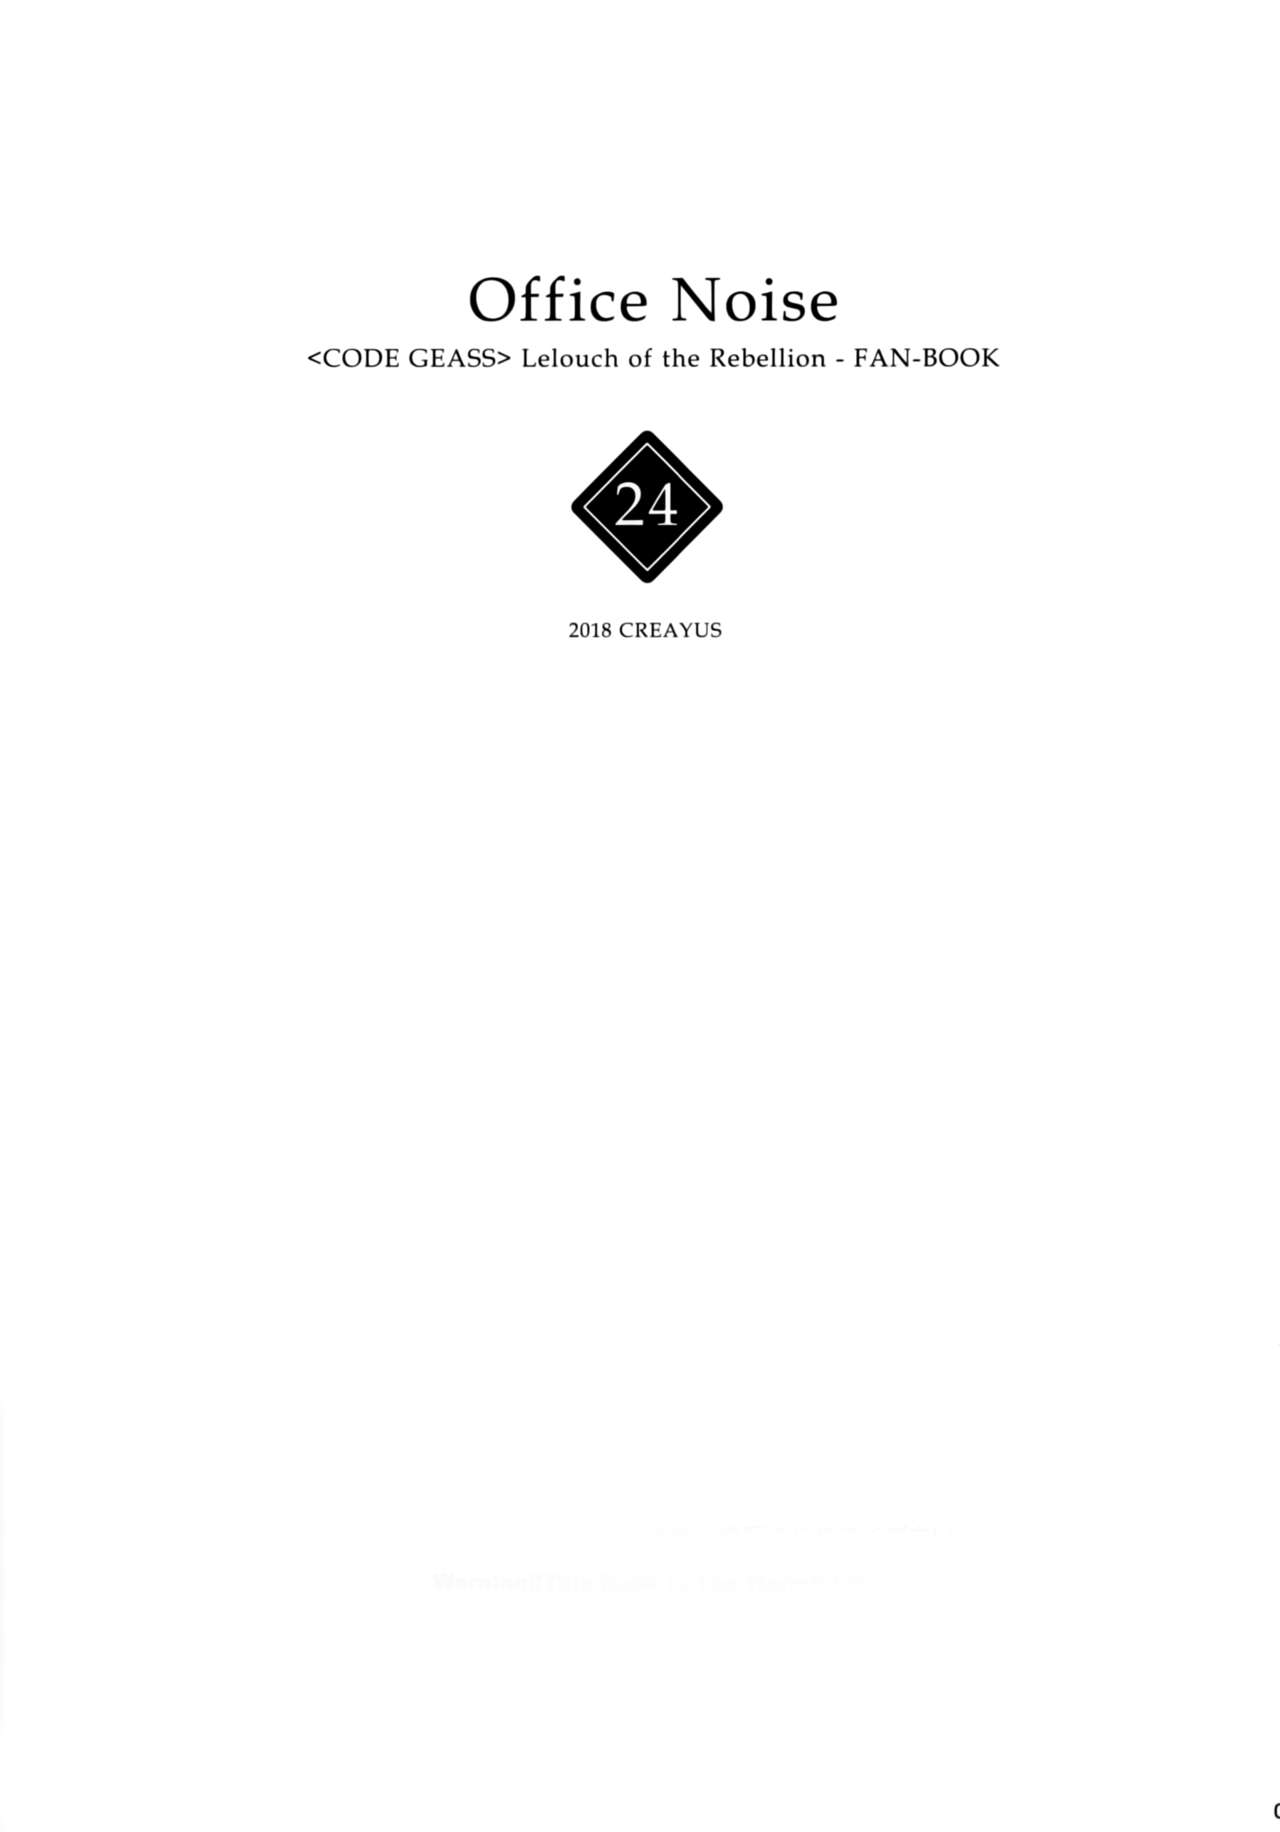 Офисный шум (Office Noise)